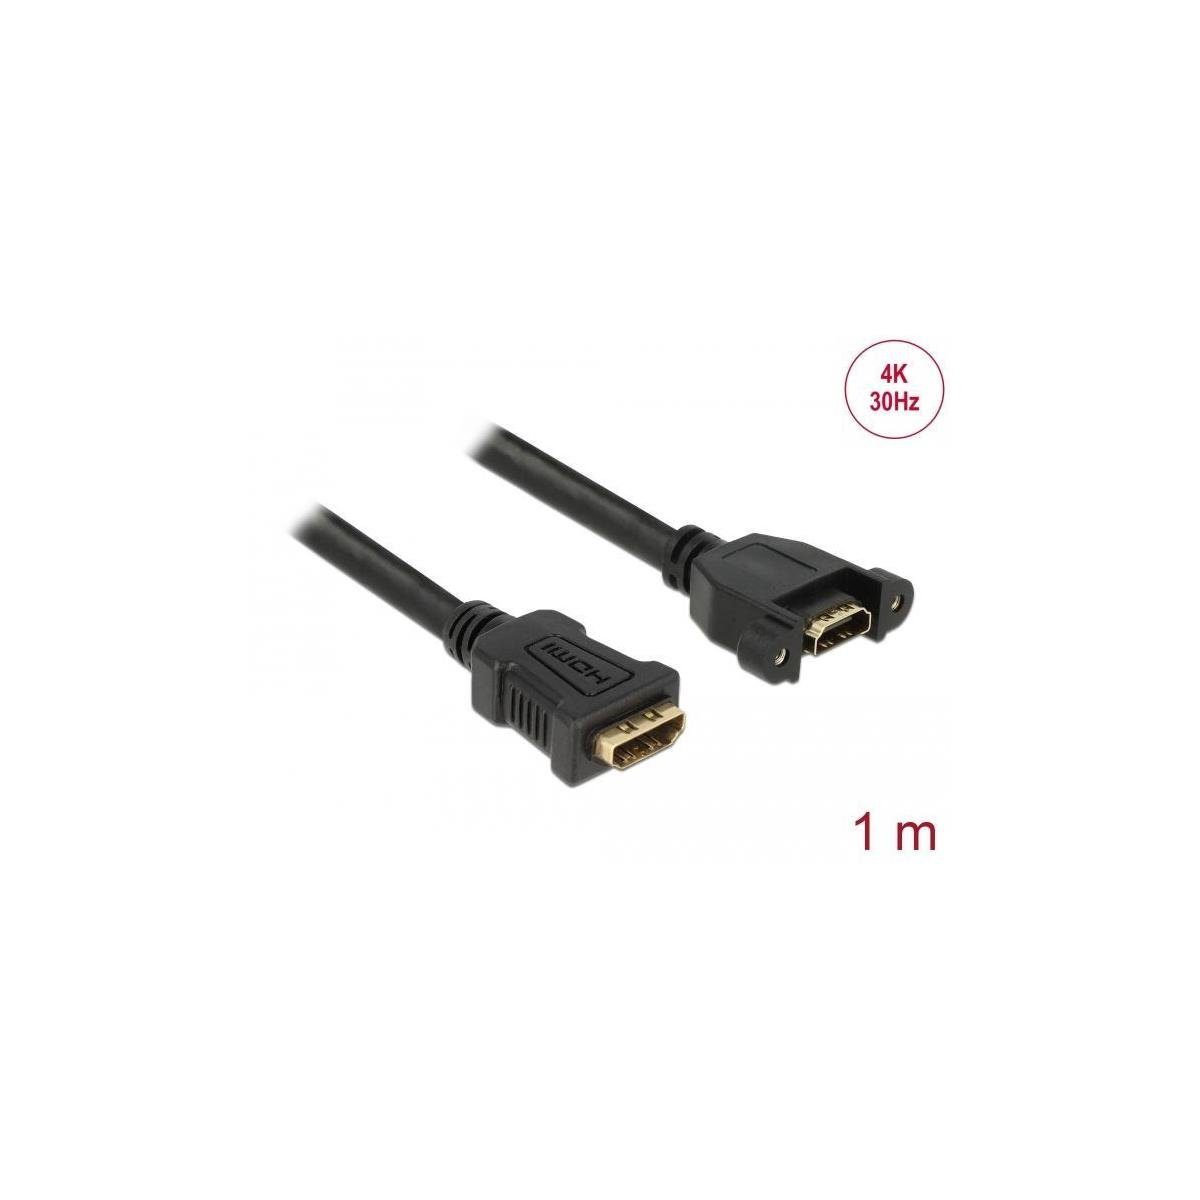 Delock Kabel HDMI-A Buchse m cm) Einbau 1 HDMI-A 4K Buchse zum HDMI-A, 30 Hz, Computer-Kabel, (100,00 > HDMI